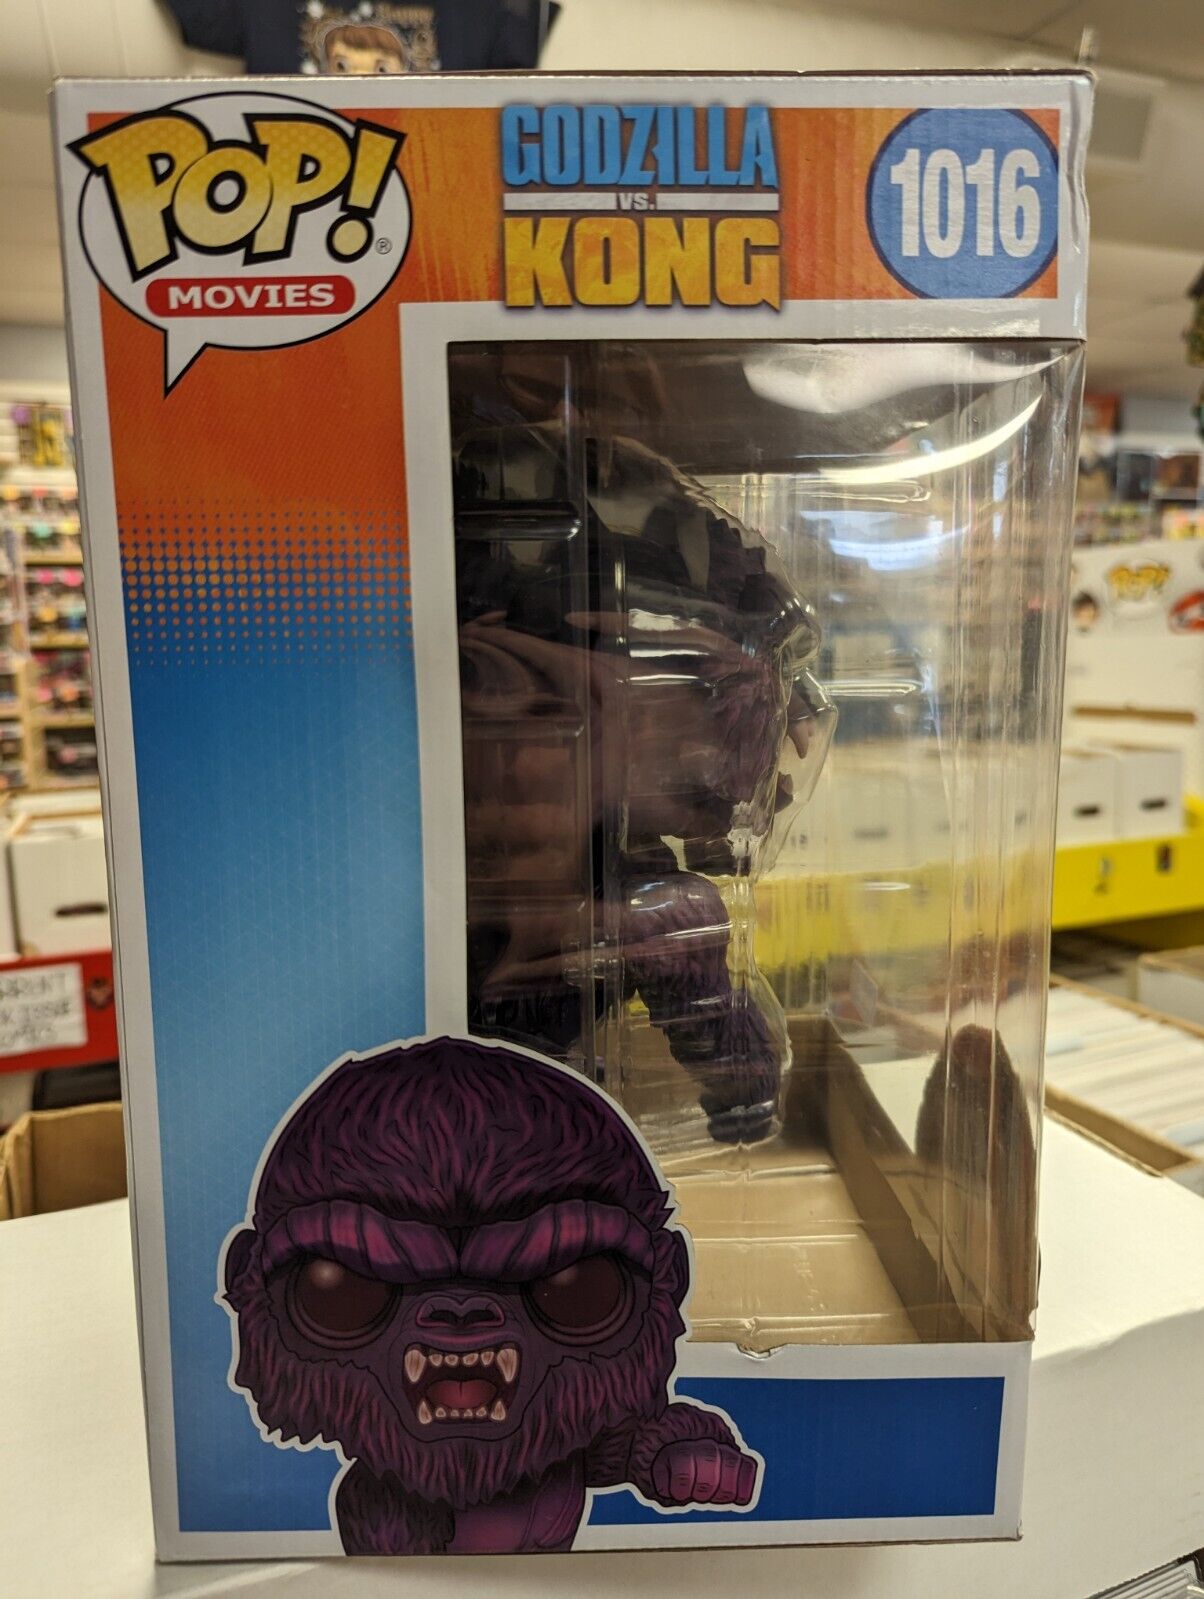 Funko Pop Neon City Kong 1016 Godzilla Vs Kong Walmart Exclusive 10 Inch